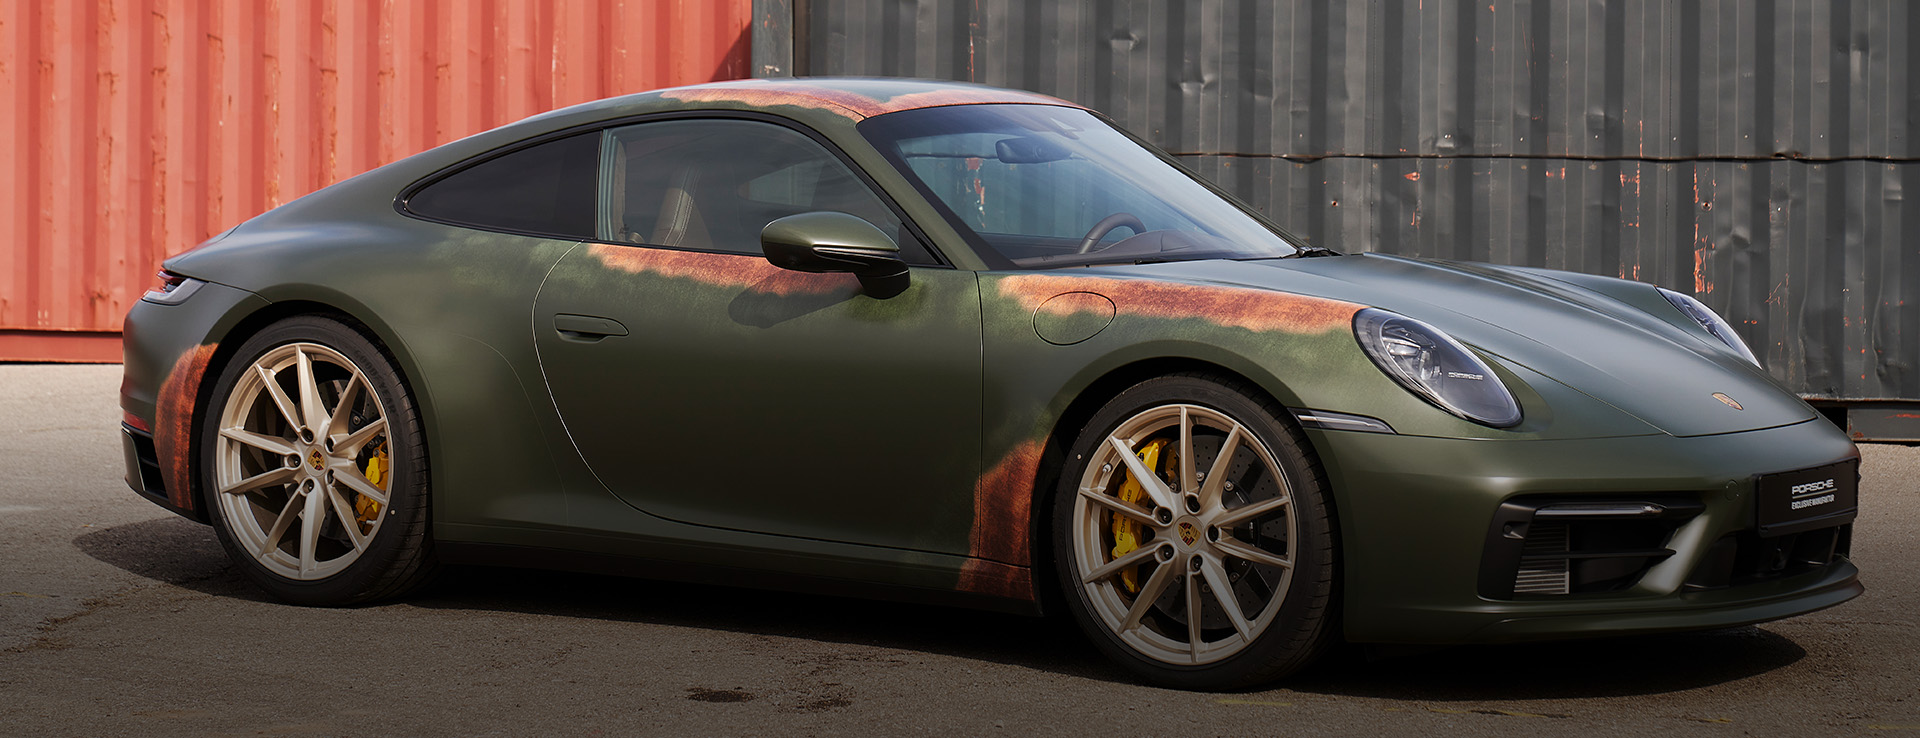 Porsche 911 with rust-like patina on its bodywork